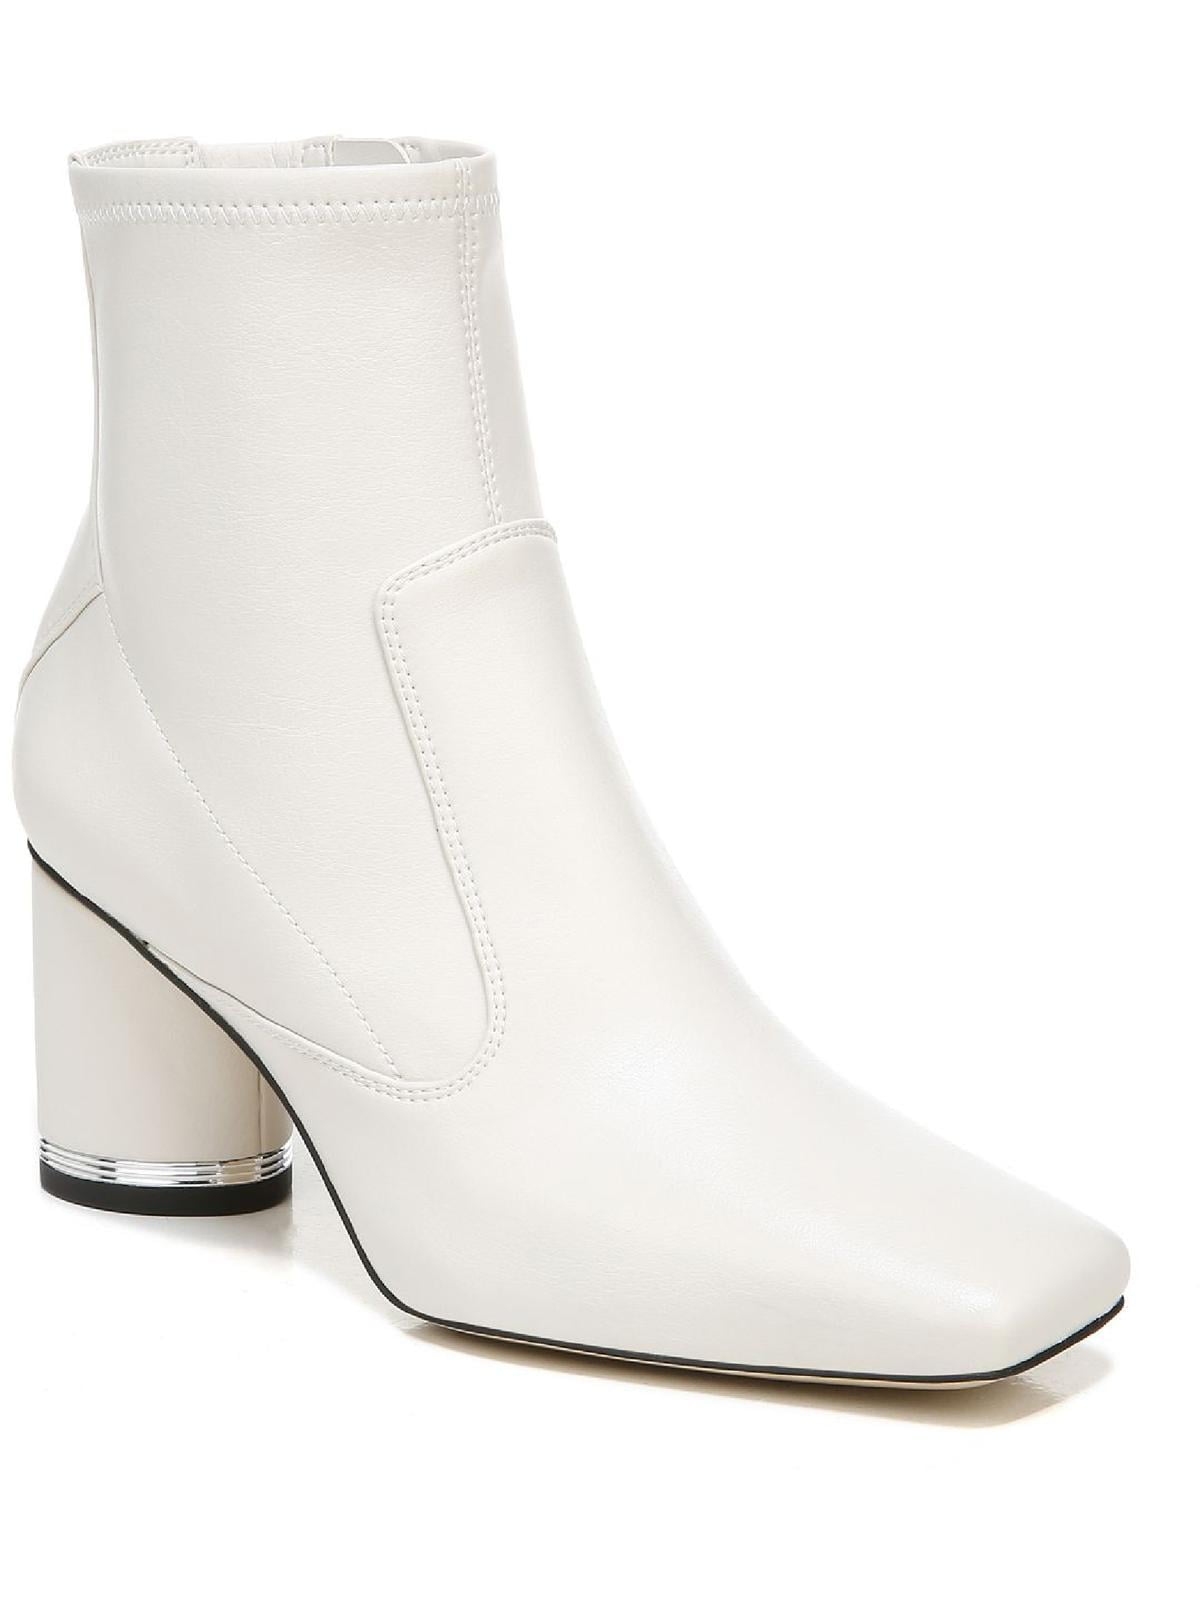 Franco Sarto Womens Pisa Booty Heel Square Toe Ankle Boots - Walmart.com